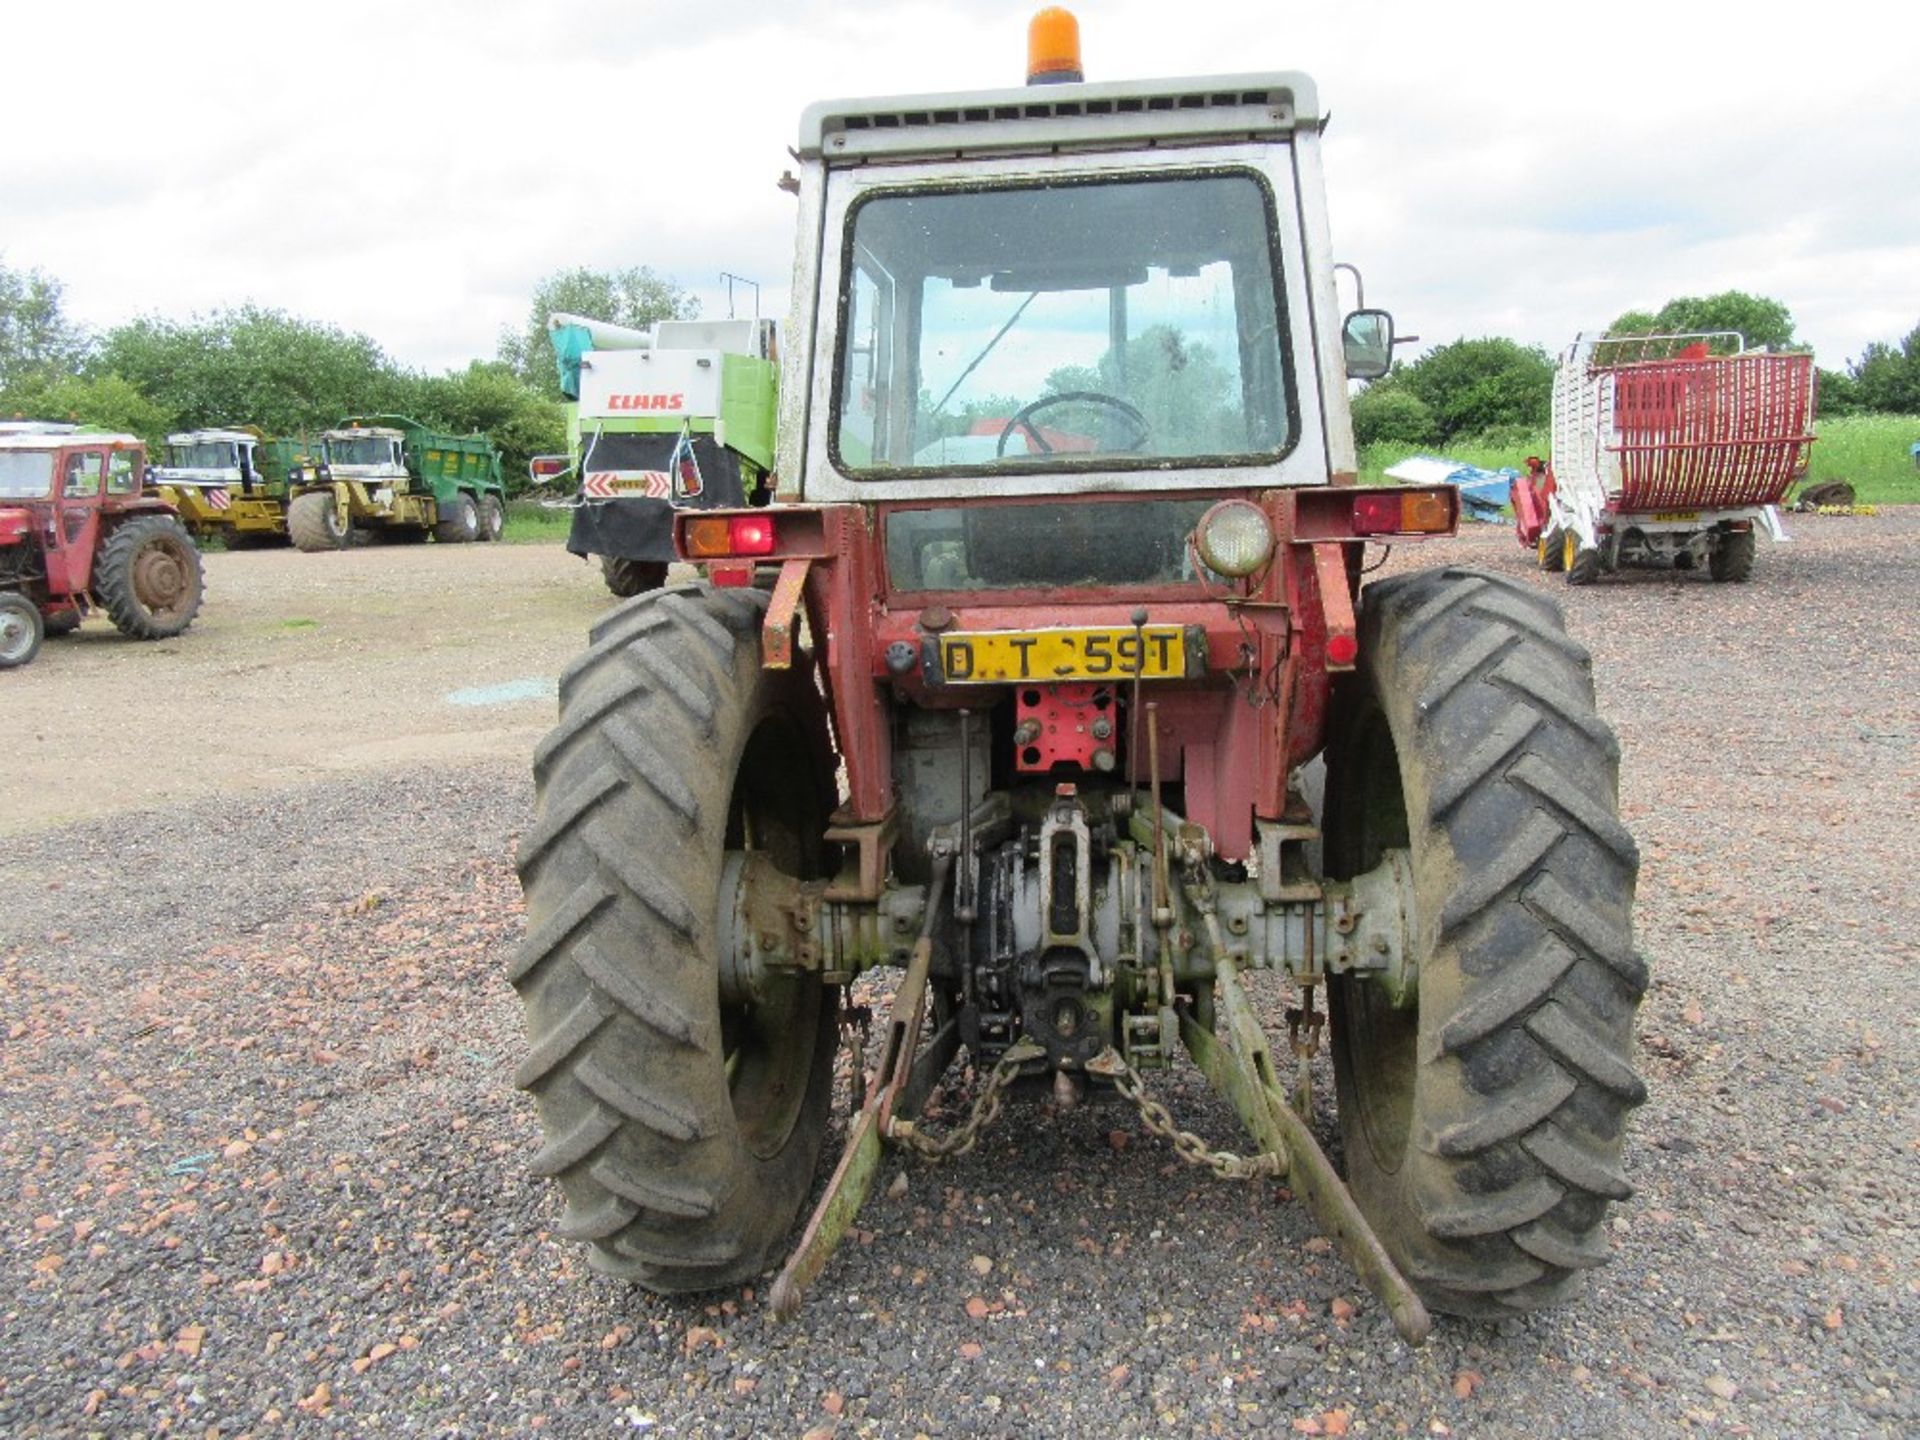 Massey Ferguson 590 Tractor. No V5. Reg.No. DRT 359T  Ser.No. 378776 - Image 5 of 5